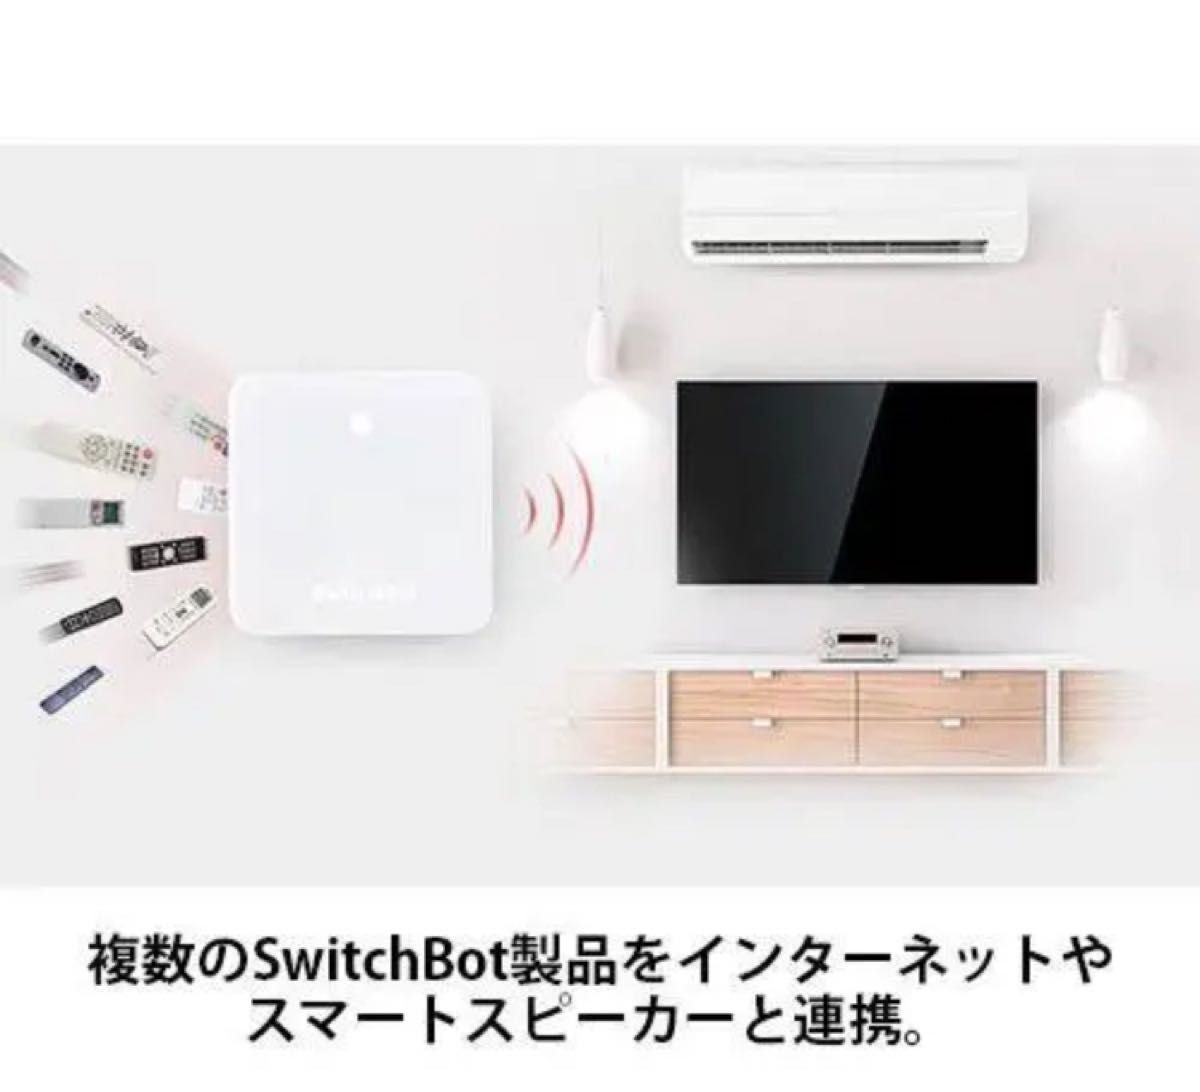 SwitchBot （スイッチボット） SwitchBot ハブミニ スマートリモコン W0202200-GH